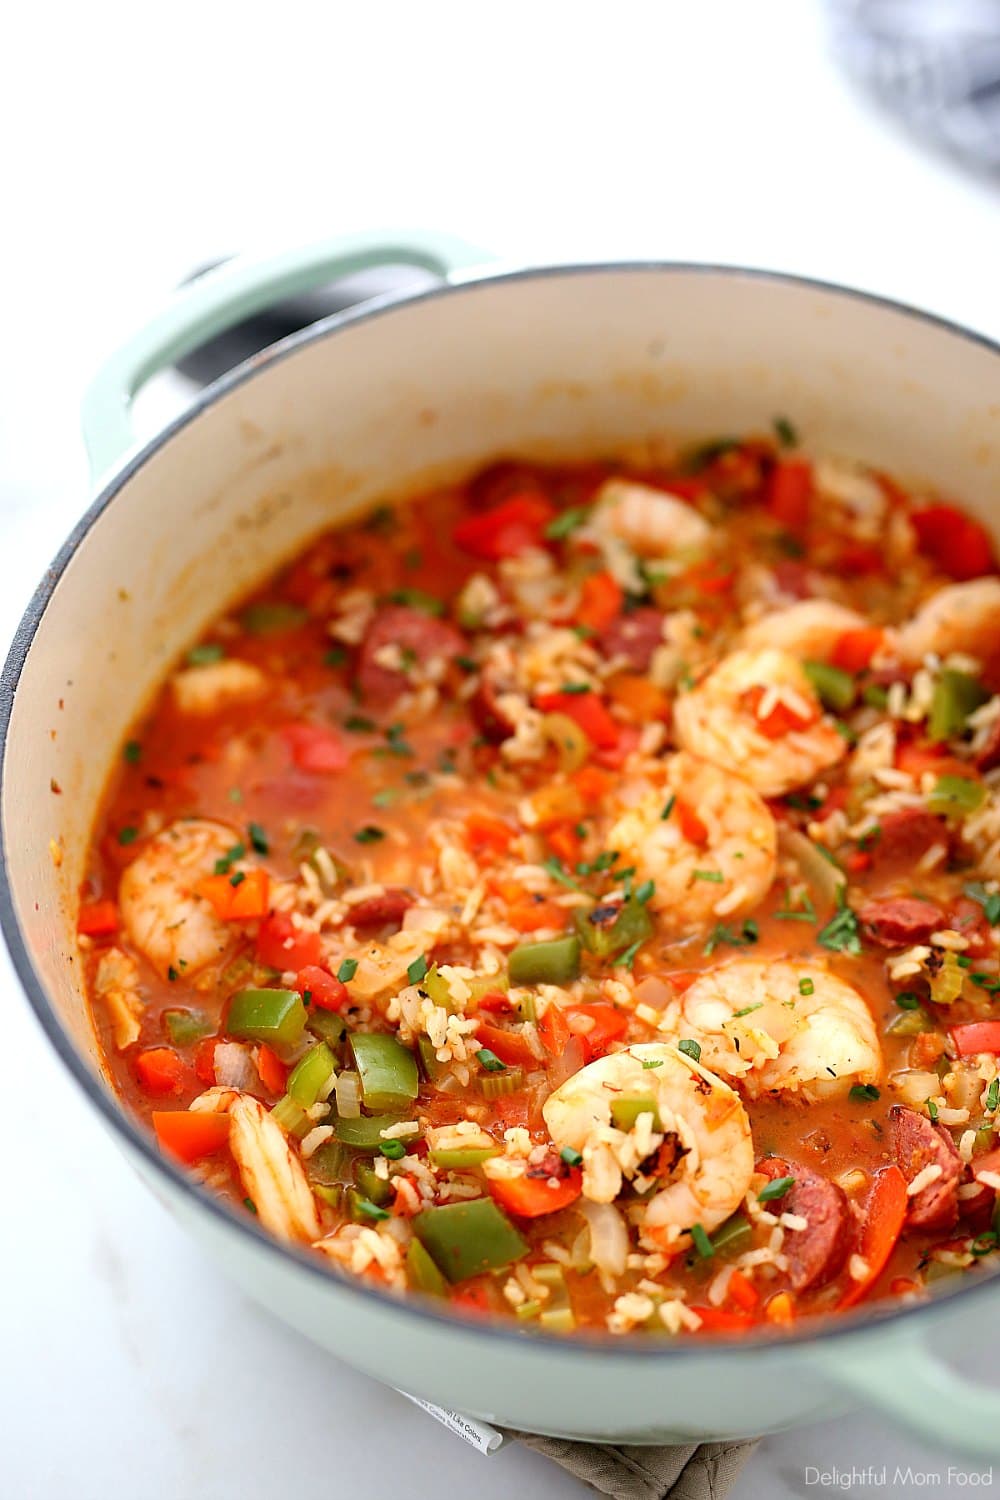 Healthy Jambalaya Recipe With Shrimp And Sausage - Delightful Mom Food